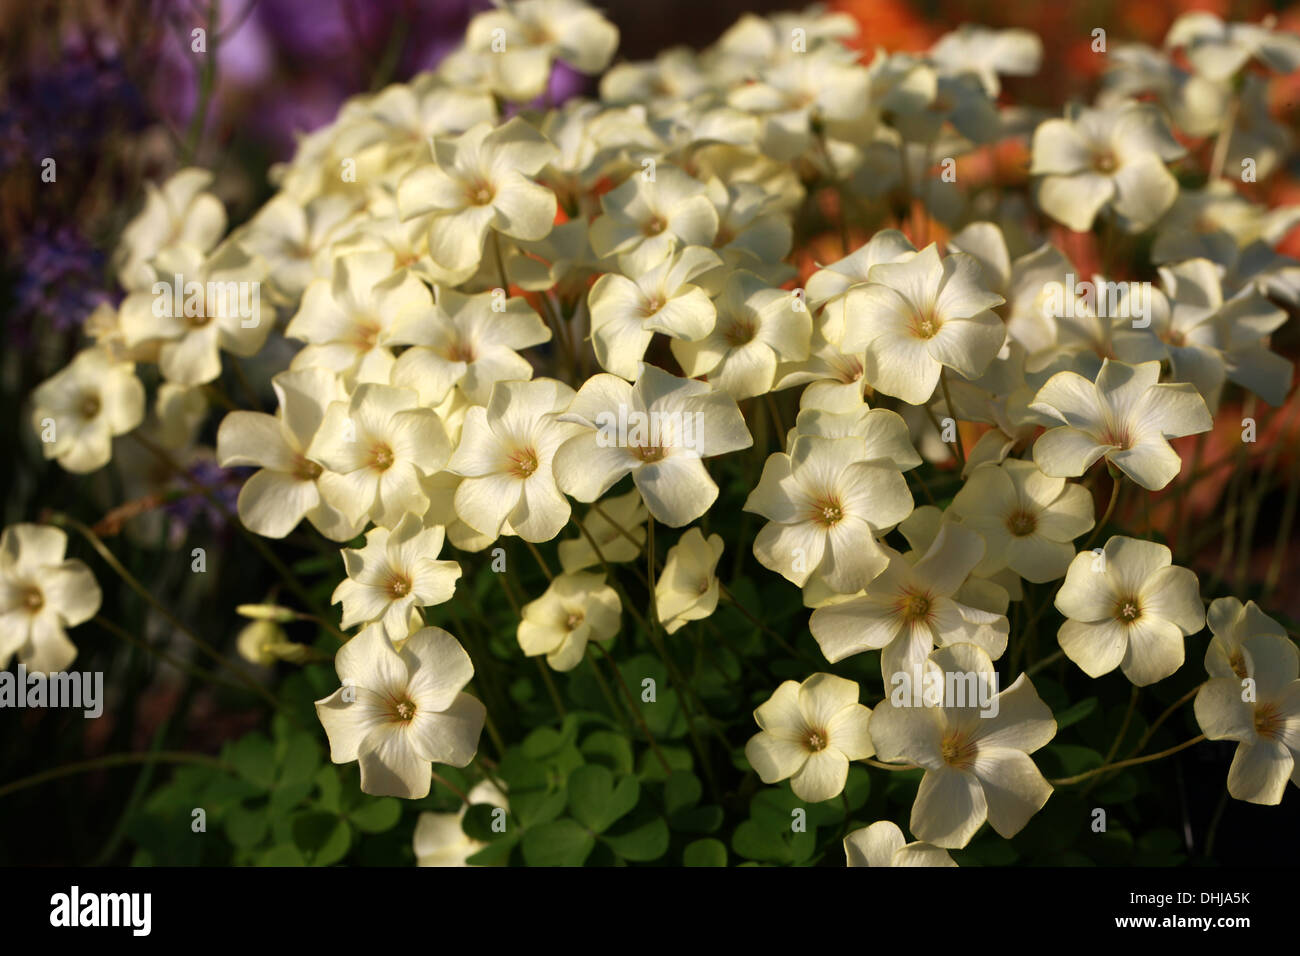 Oxalis perdicaria "Cetrino", Oxalidaceae. Chile, Southern South America. Stock Photo